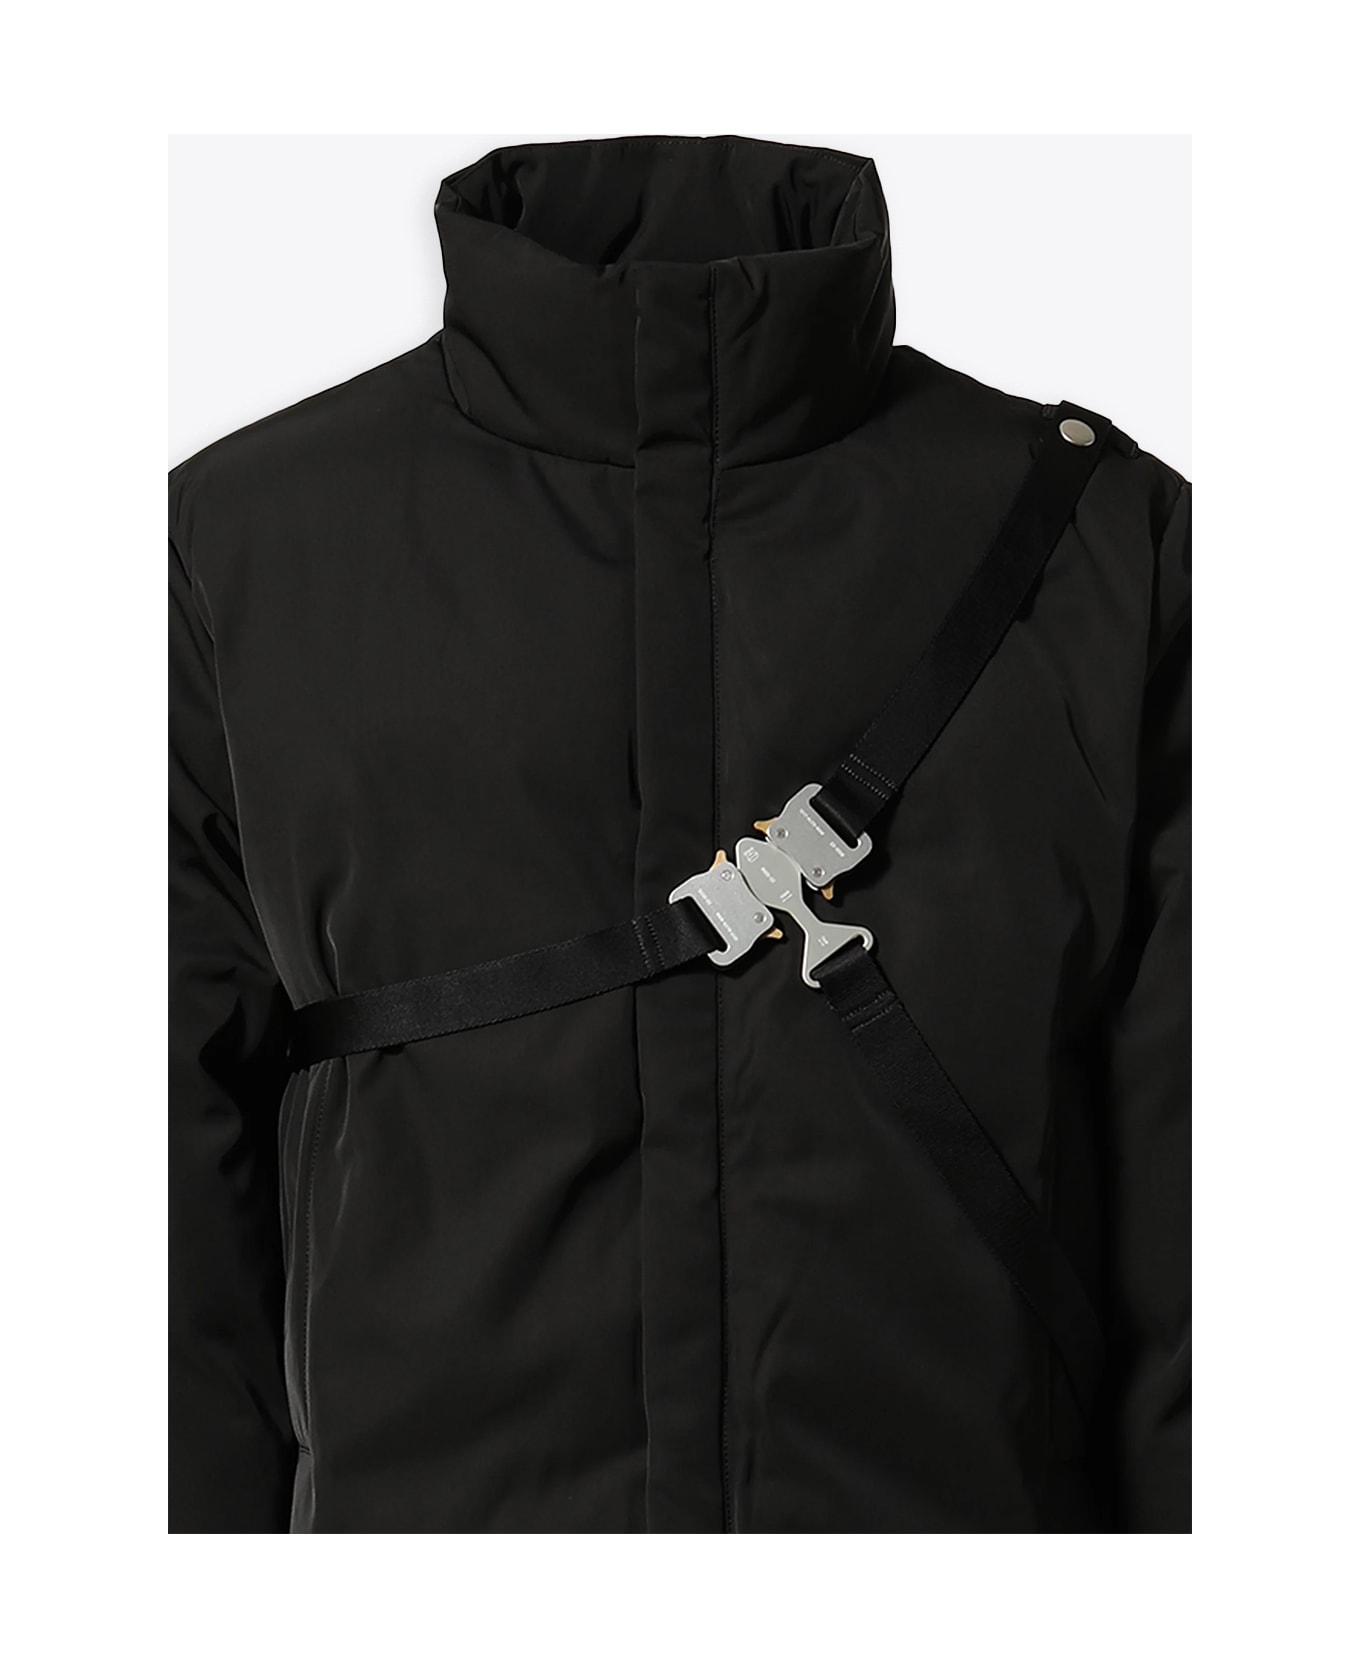 1017 ALYX 9SM Tricon Puffer - X Black nylon puffer jacket with buckle - Tricon vest X - Nero